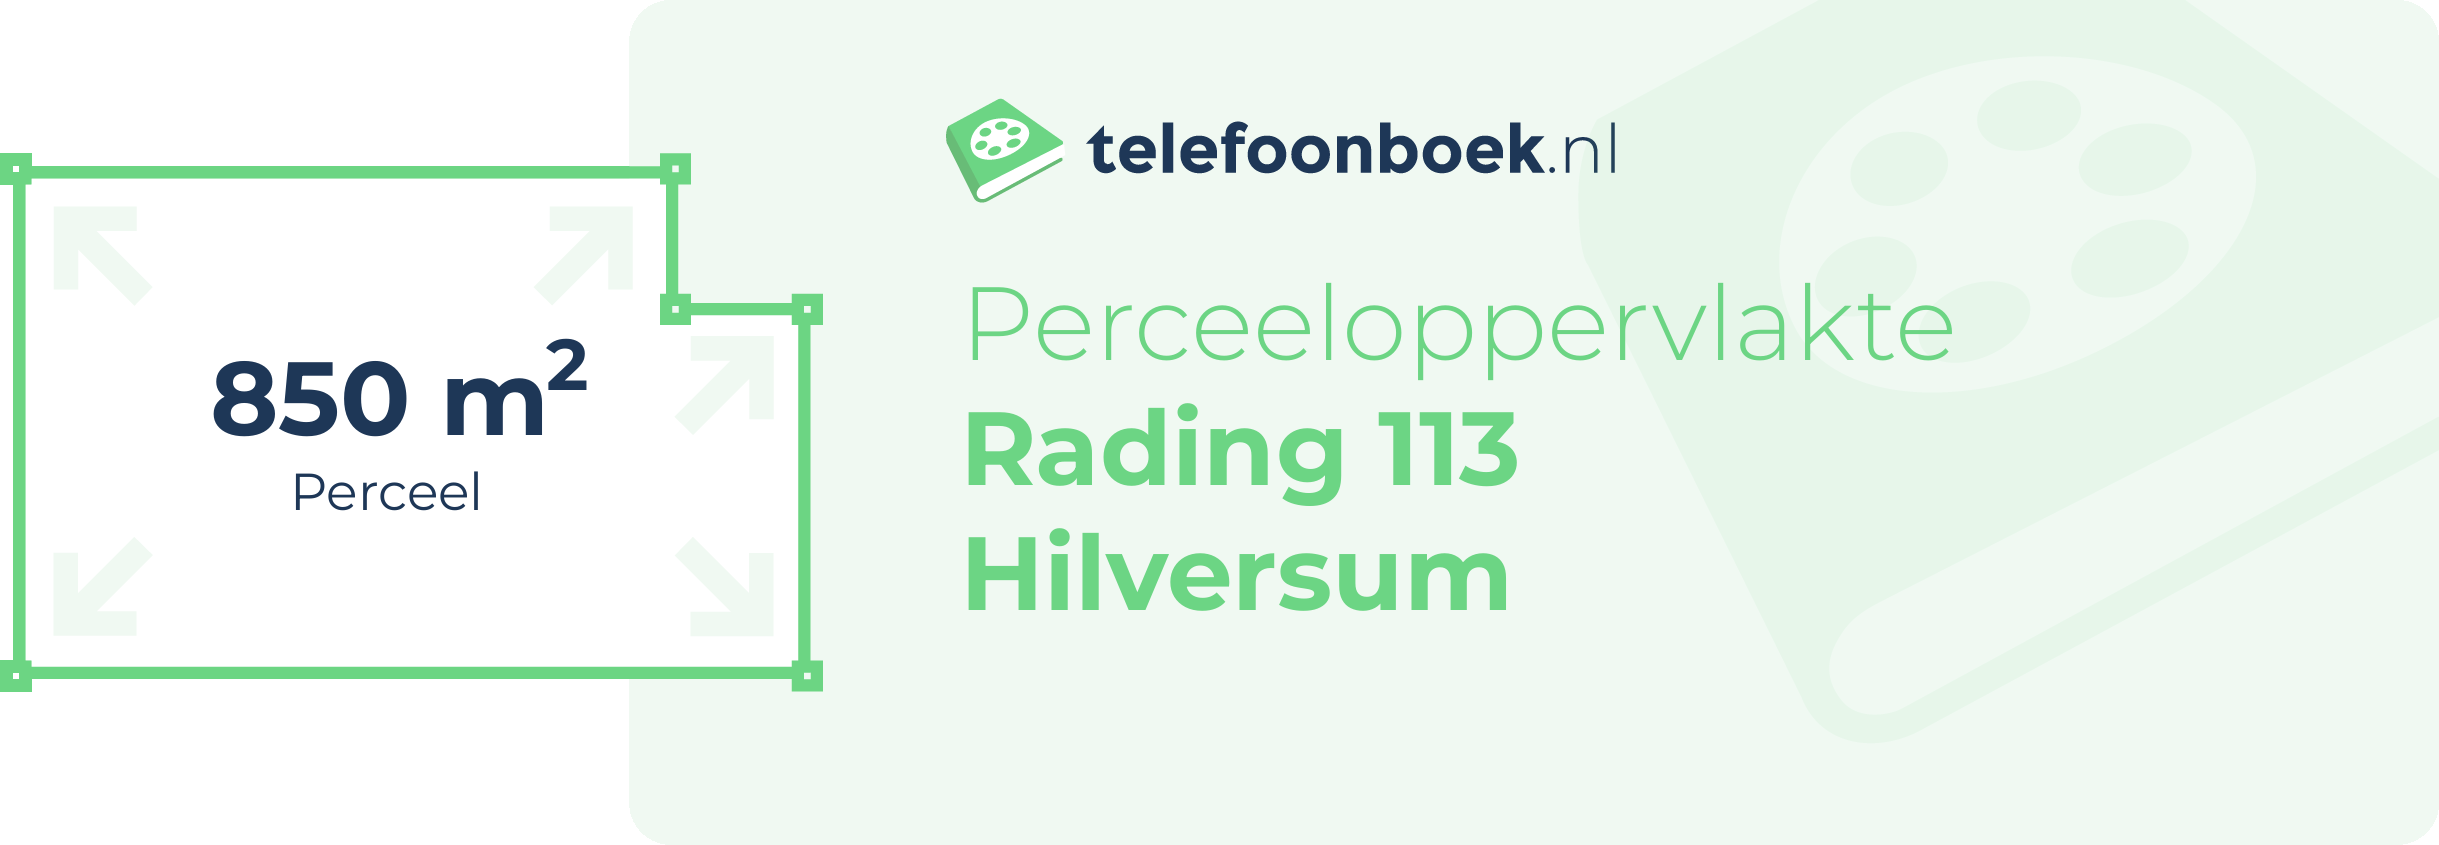 Perceeloppervlakte Rading 113 Hilversum